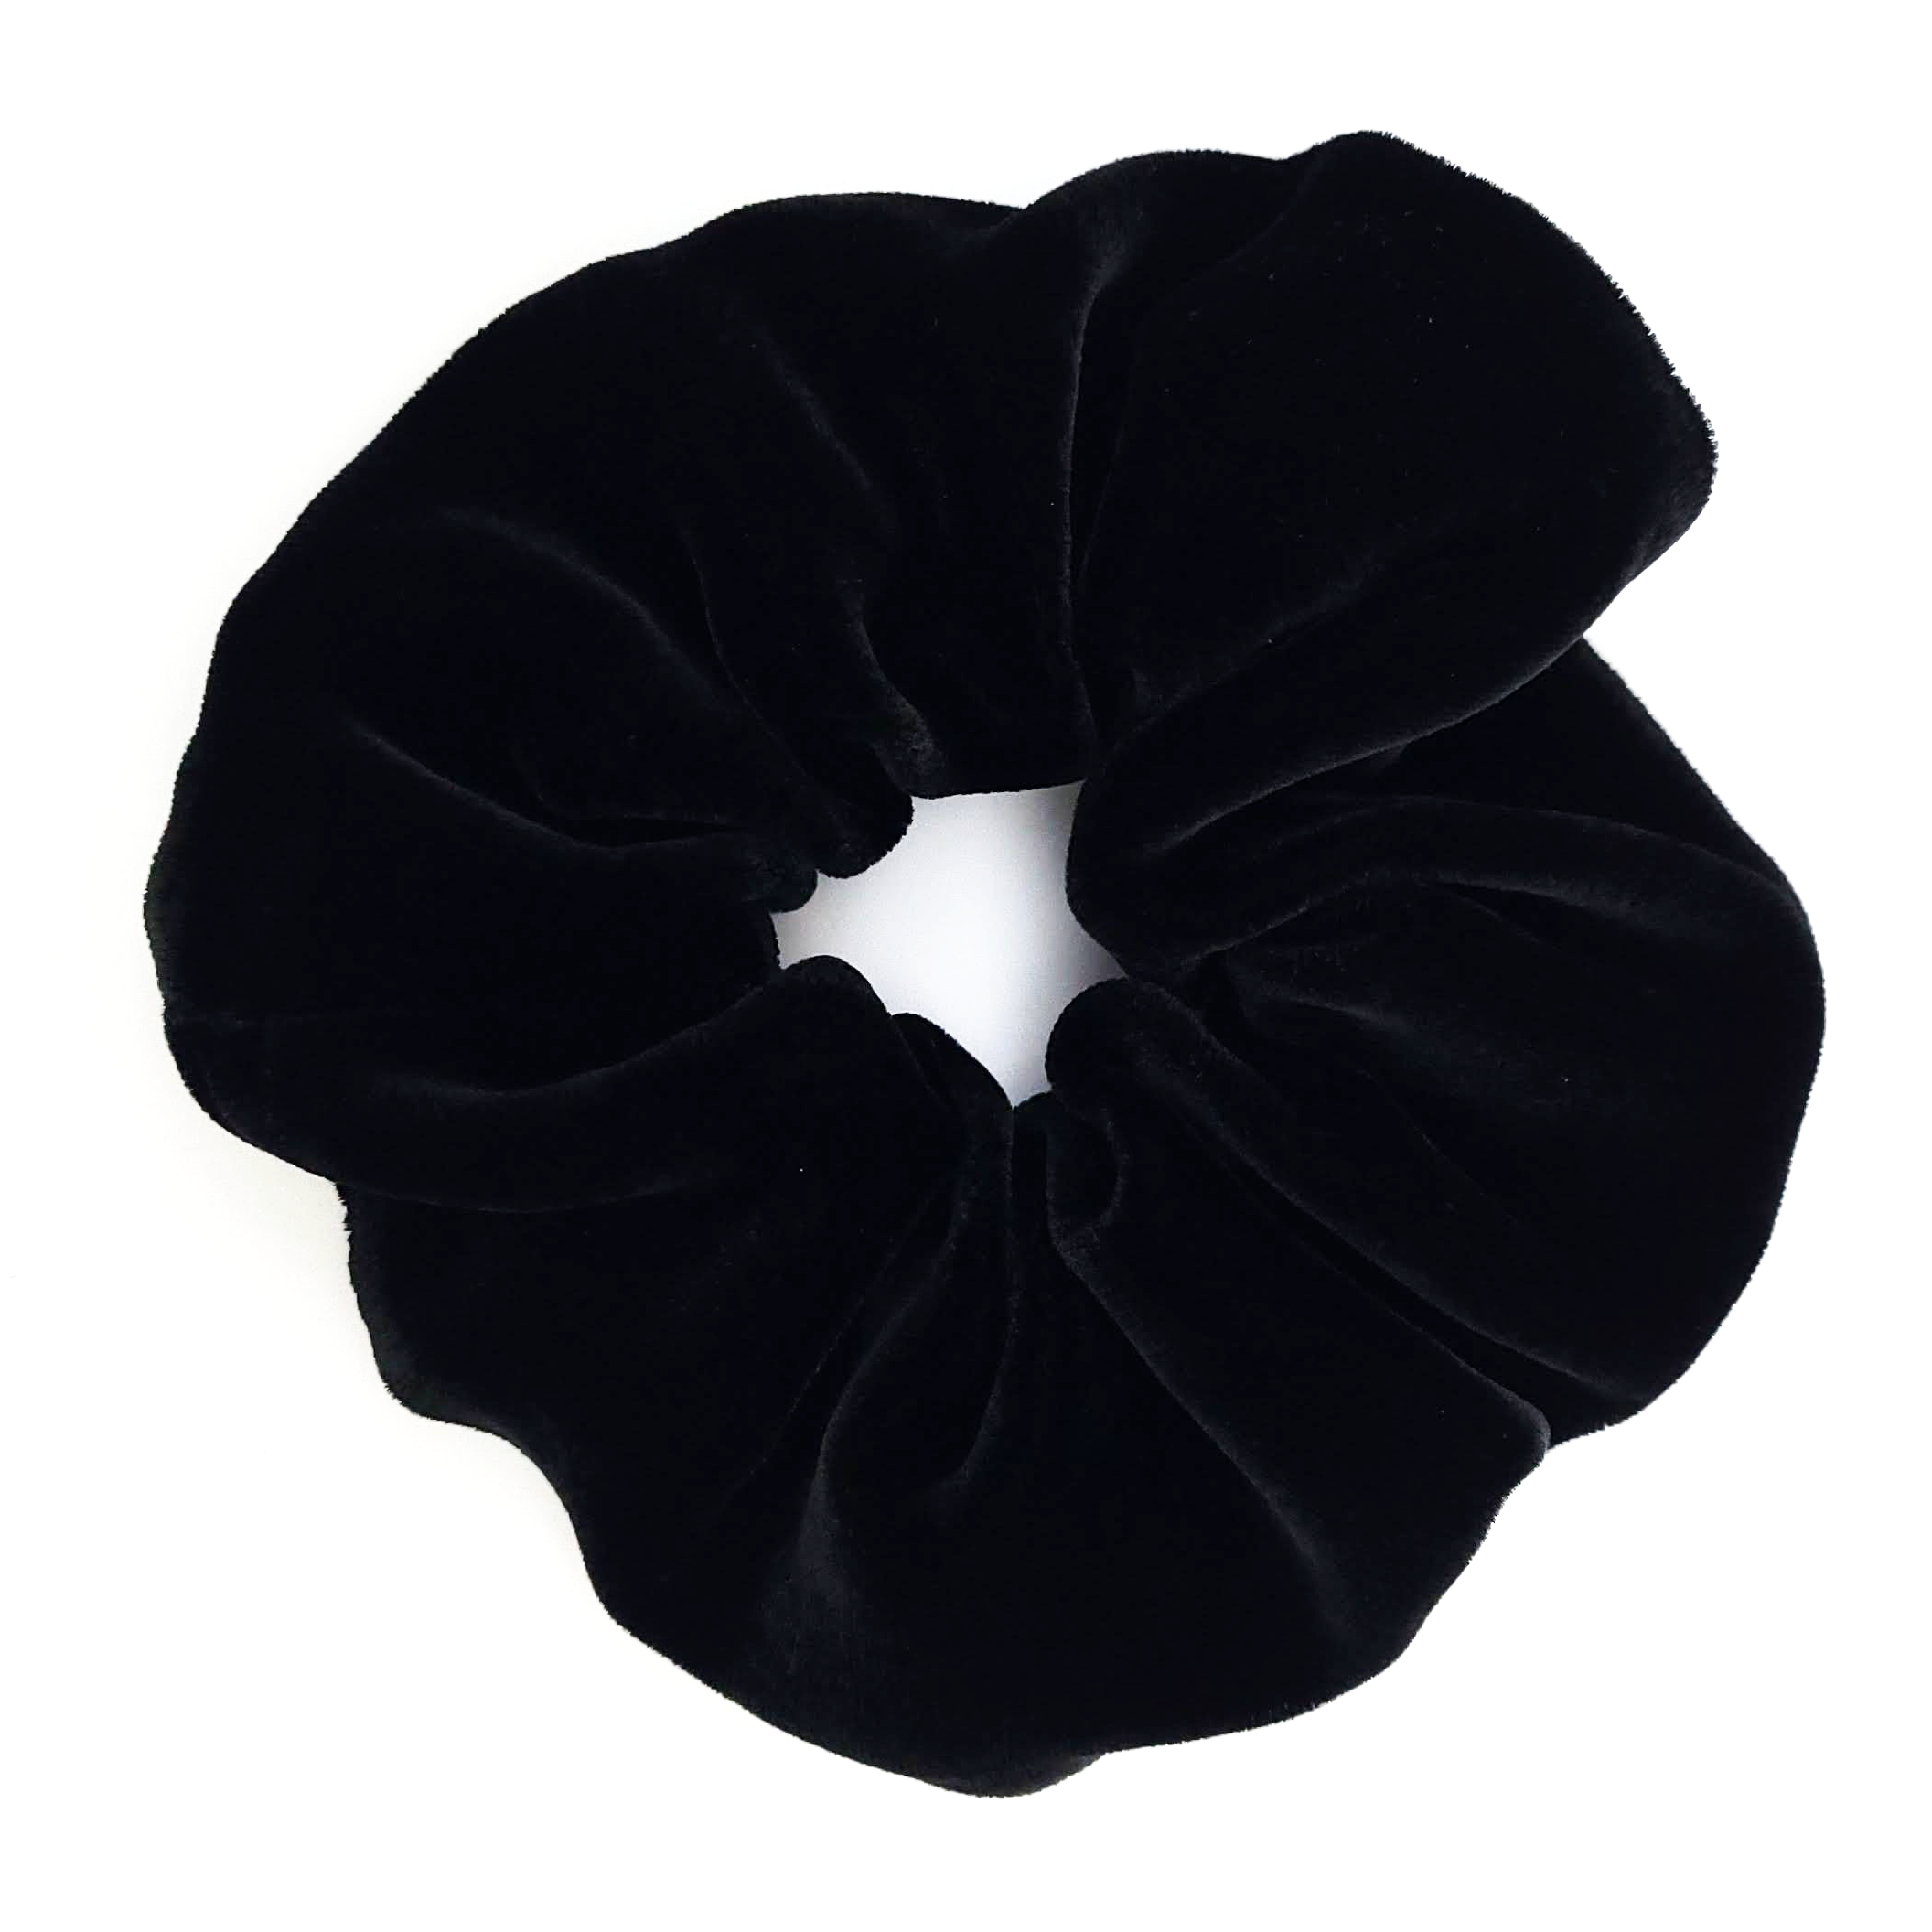 large size black velvet scrunchie hair tie handmade by Lynne Kiel